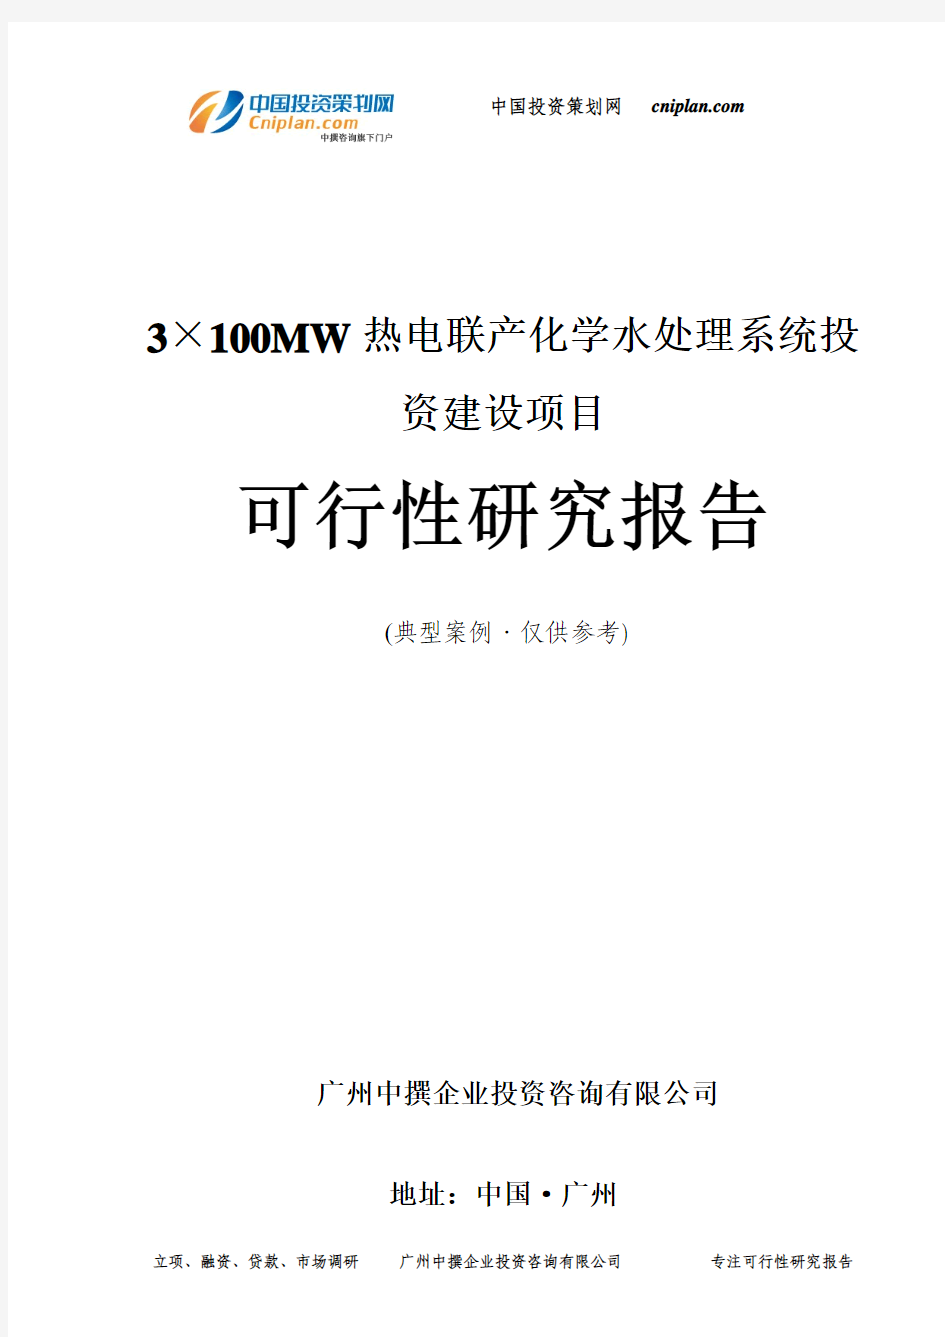 3×100MW热电联产化学水处理系统投资建设项目可行性研究报告-广州中撰咨询